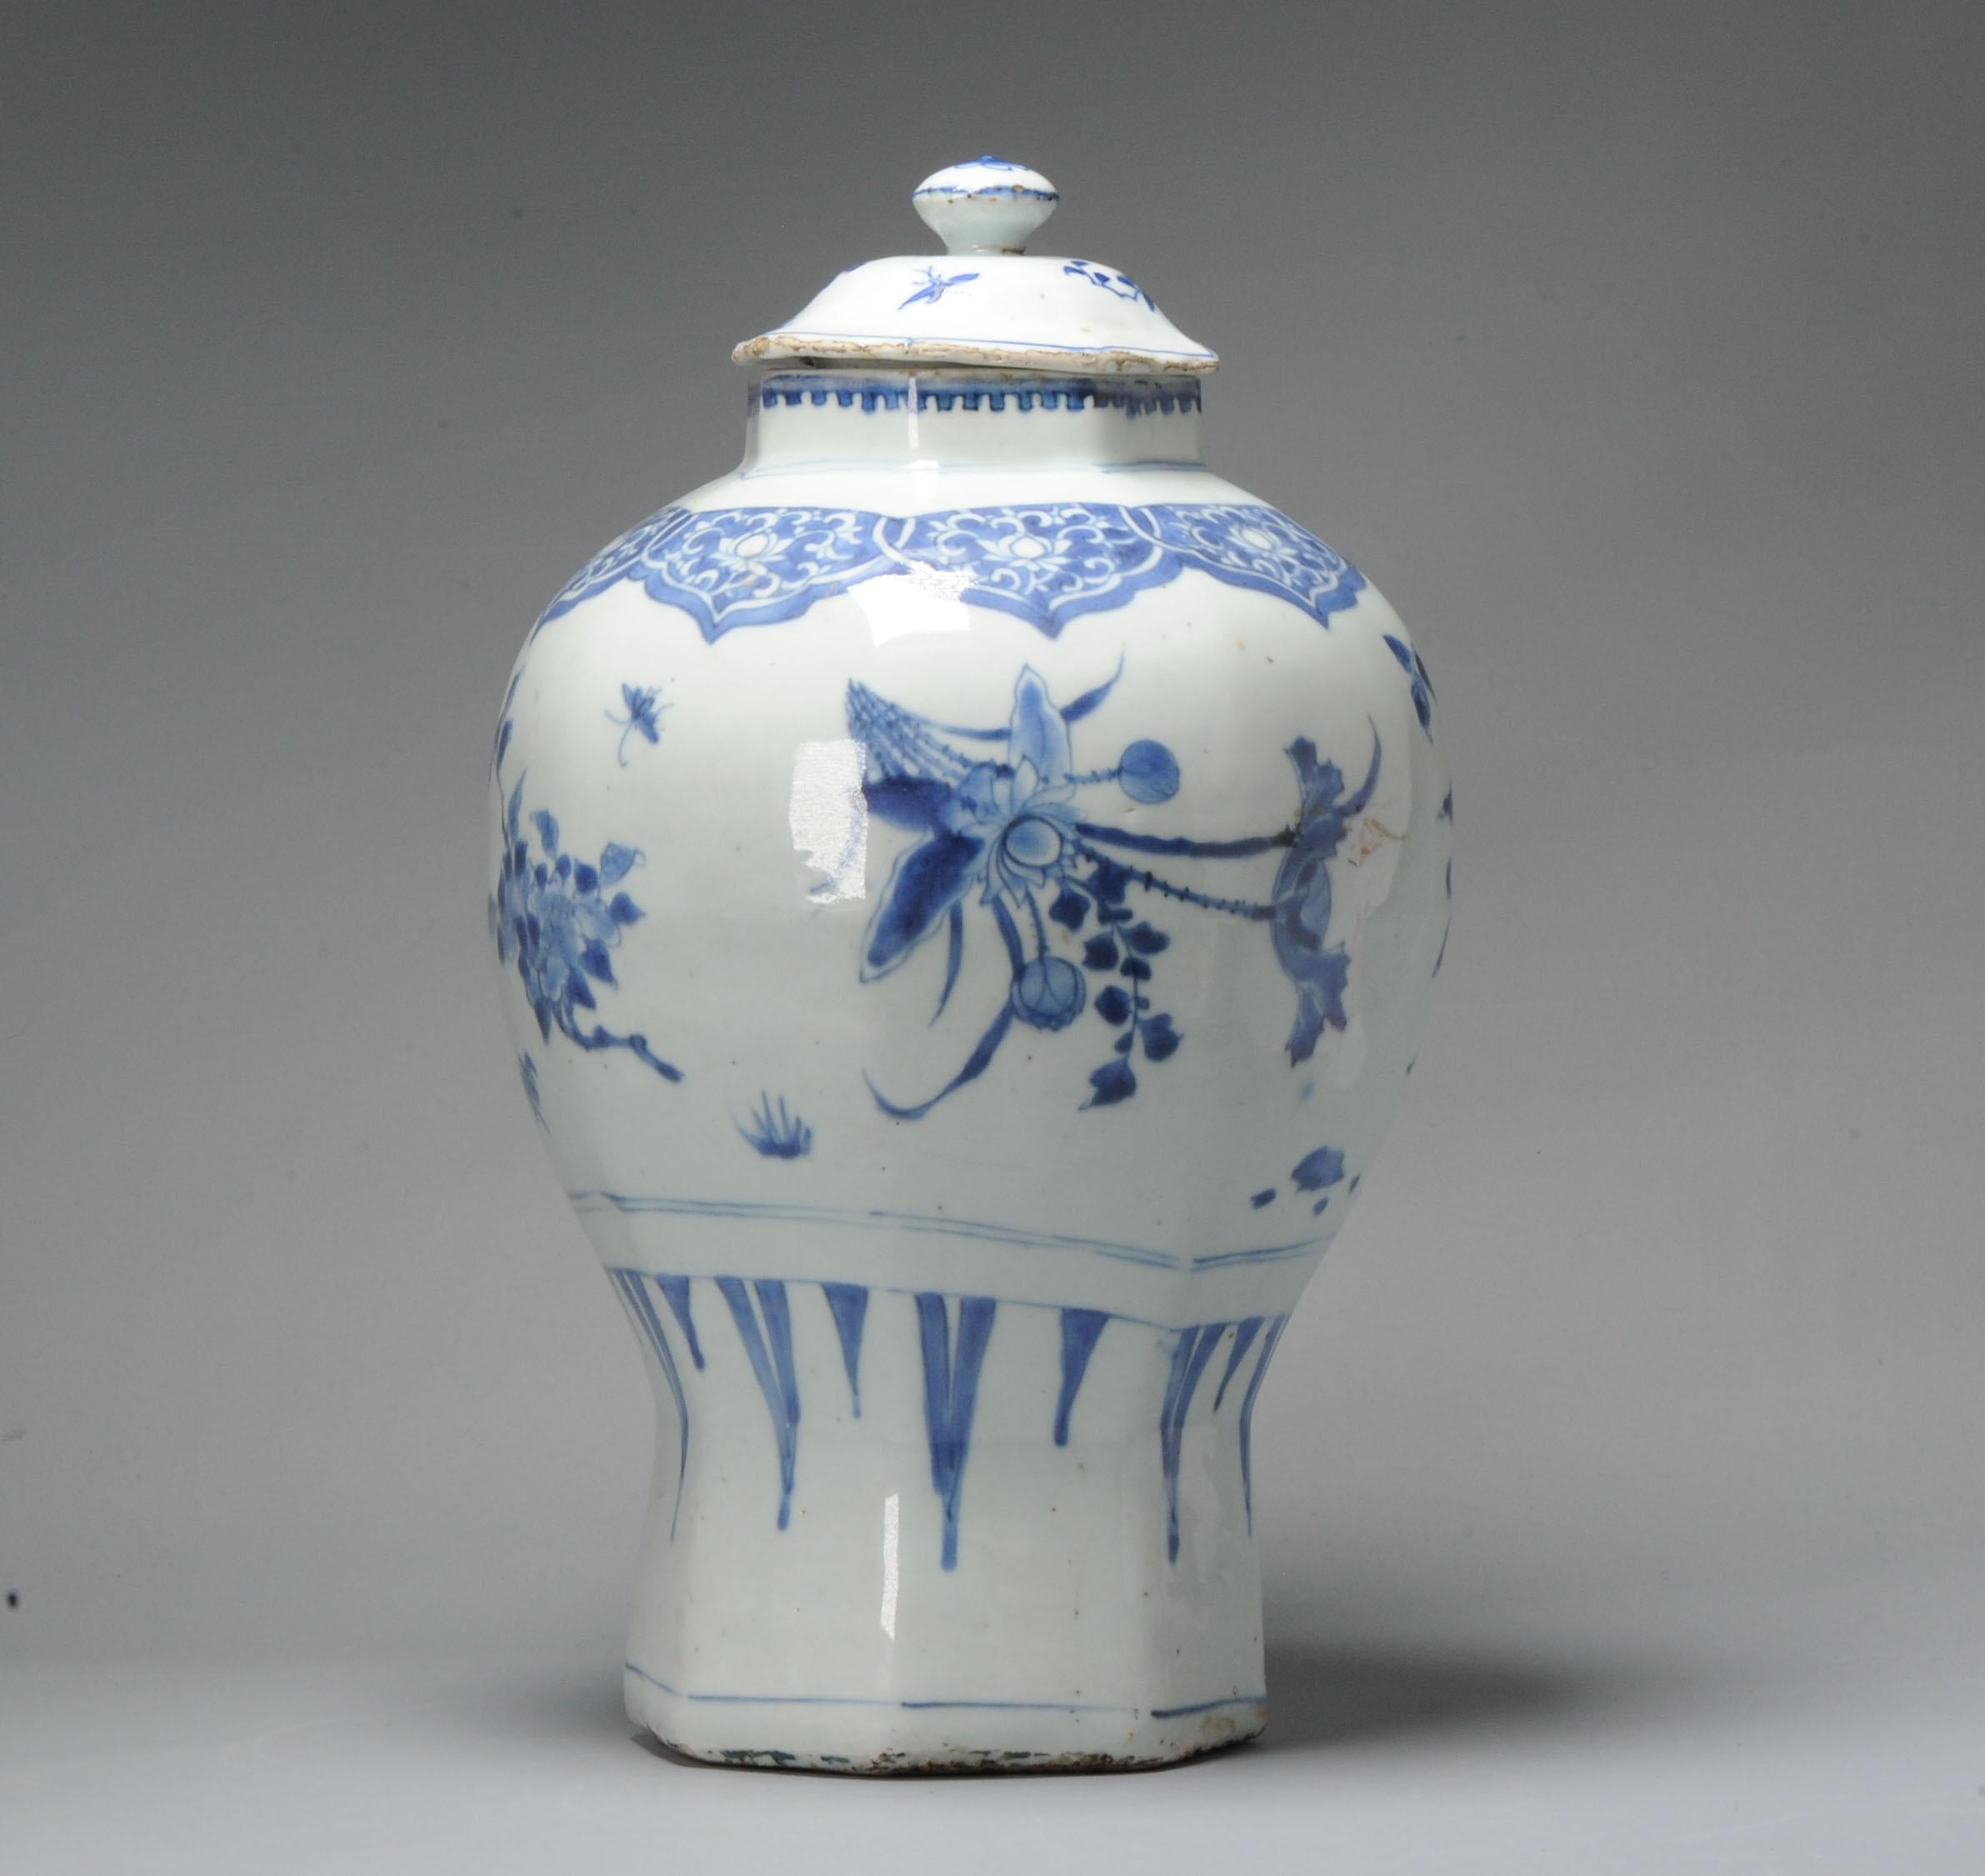 Rare Antique 17th C Transitional Chinese Porcelain Lidded Vase / Jar China For Sale 1